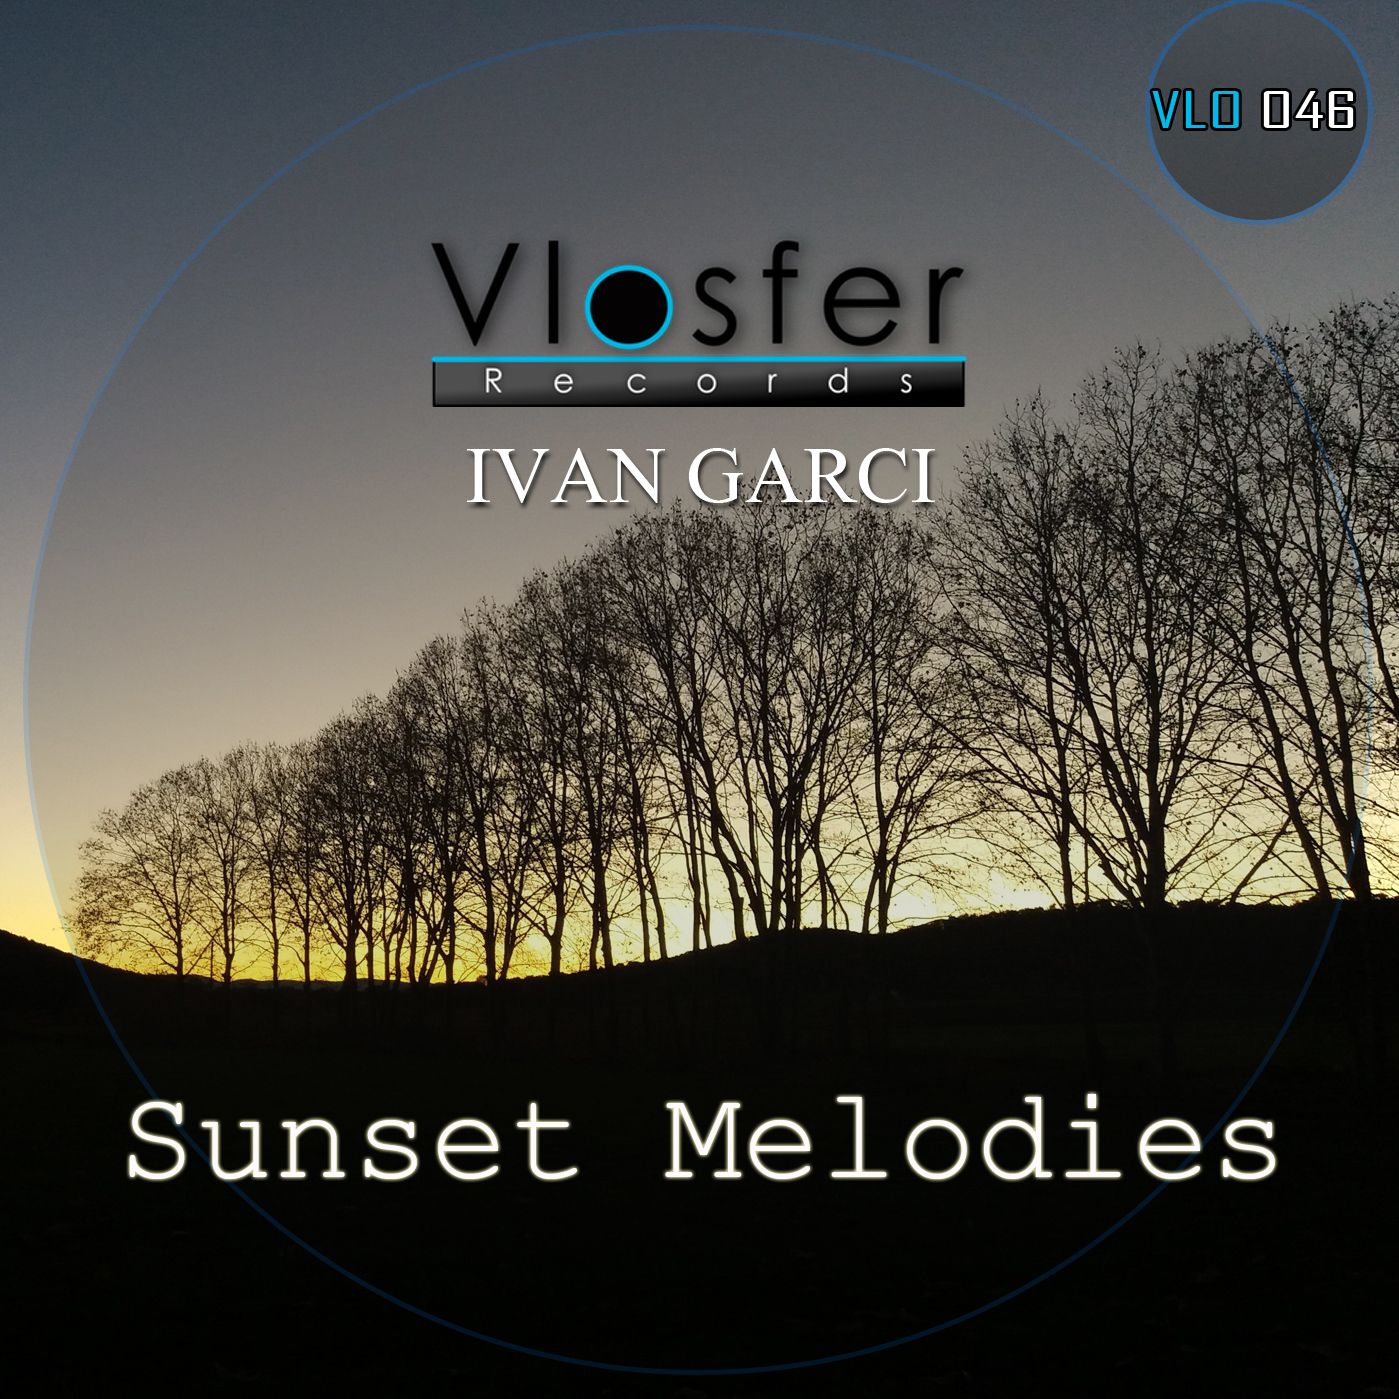 دانلود Clear - Ivan Garci (low quality sound) Vlosfer records.